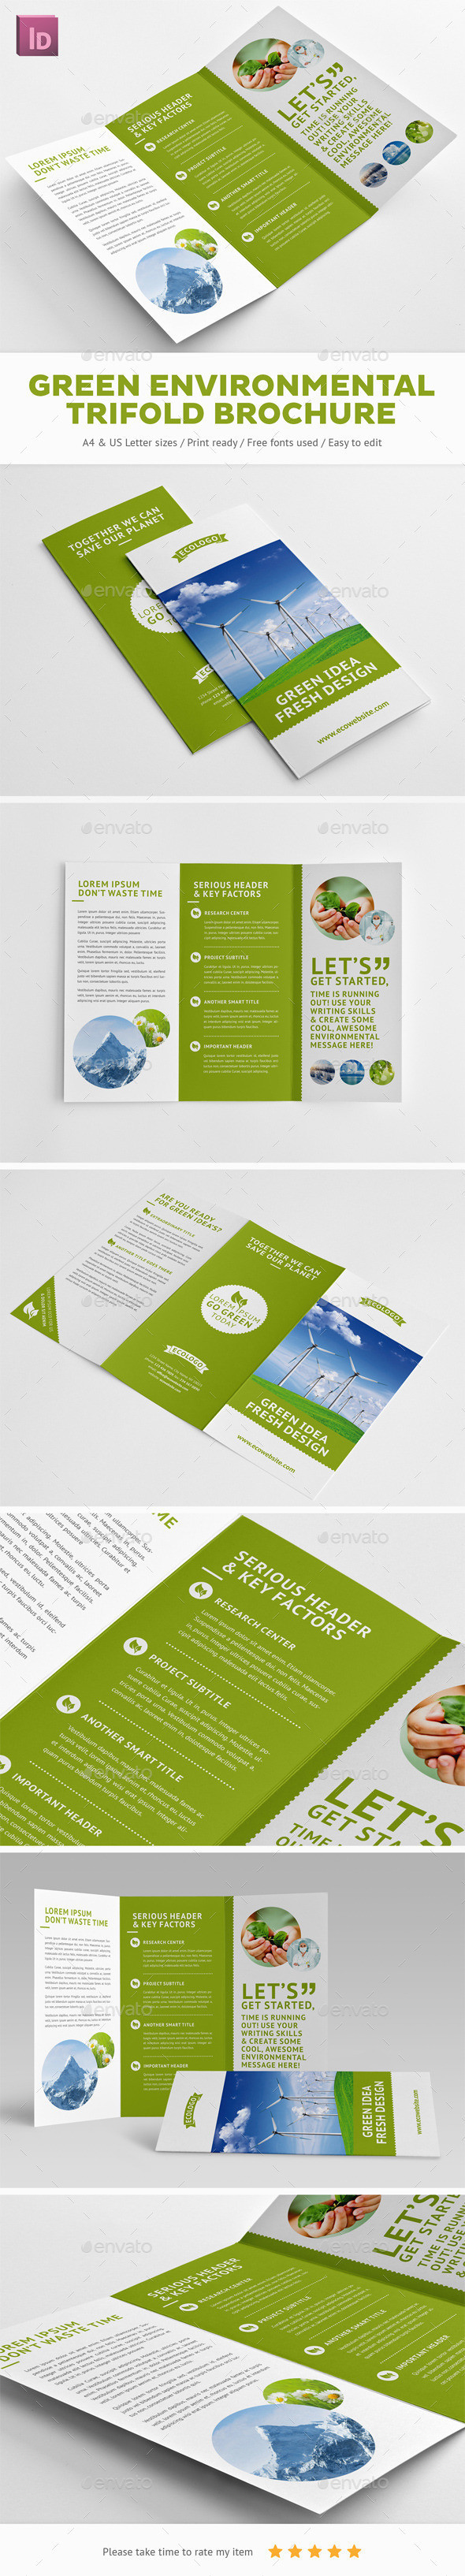 Green environmental trifold brochure mockup